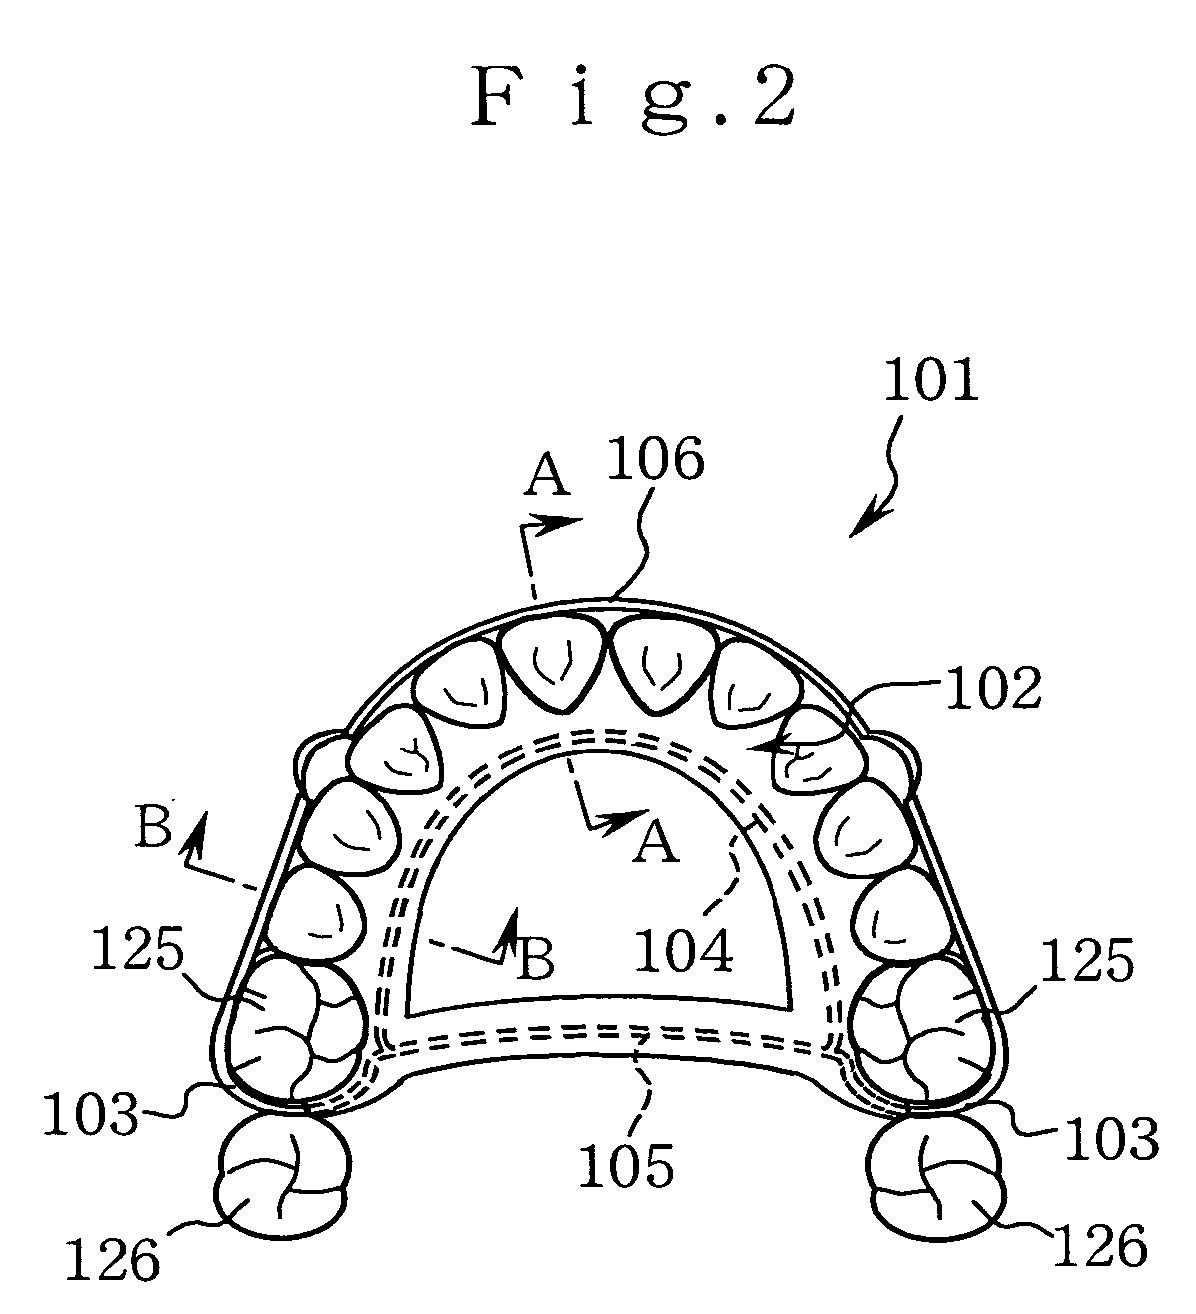 Orthodontic retainer